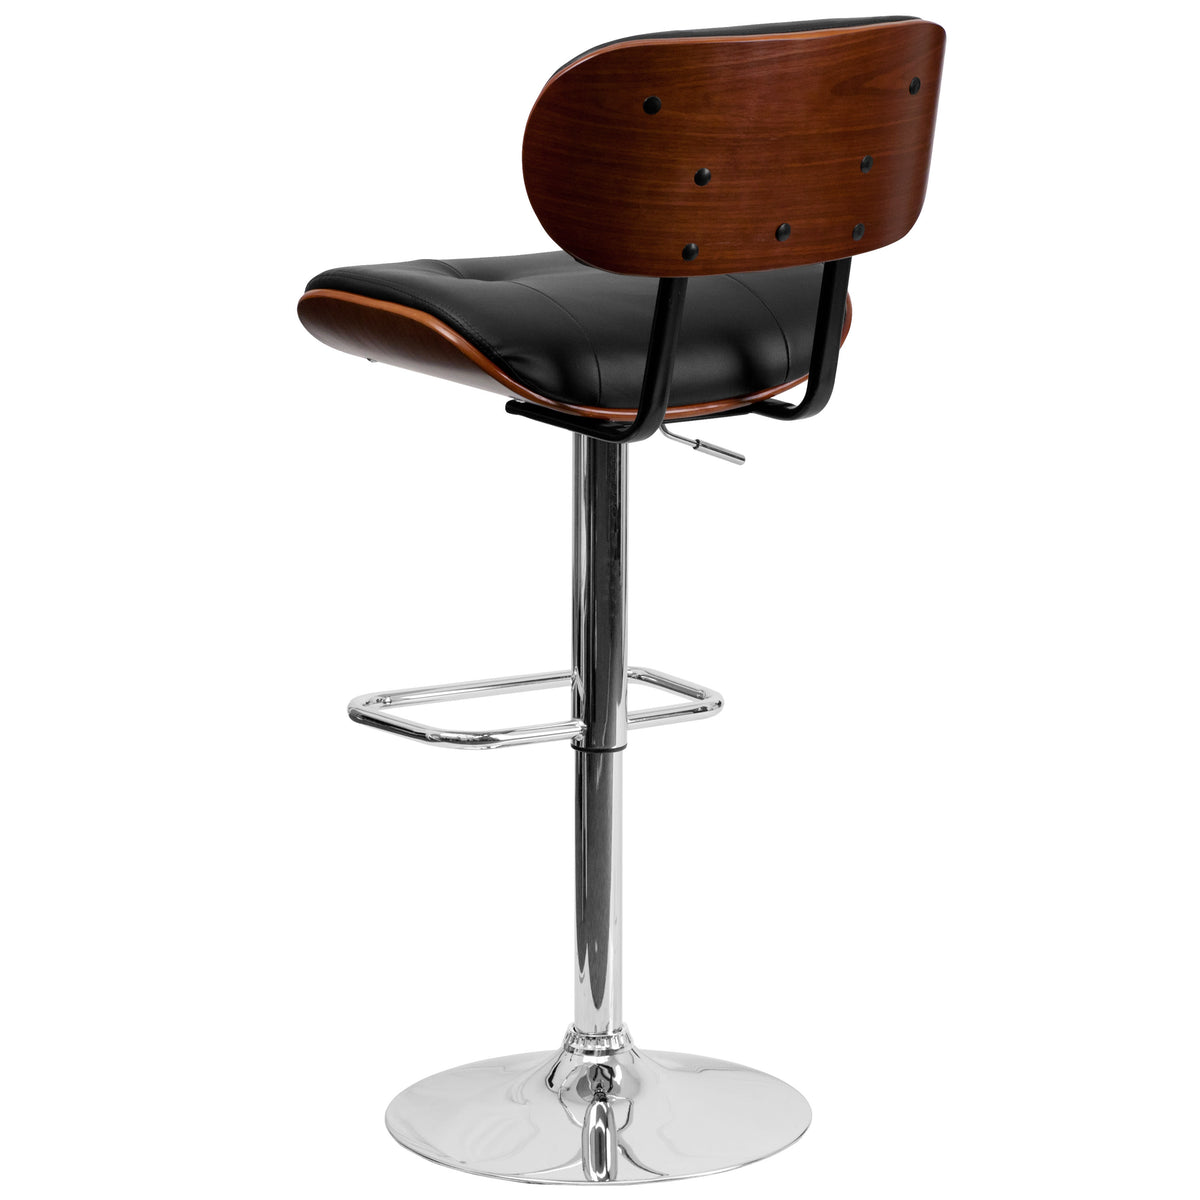 Walnut |#| Walnut Bentwood Adjustable Height Barstool with Button Tufted Black Vinyl Seat